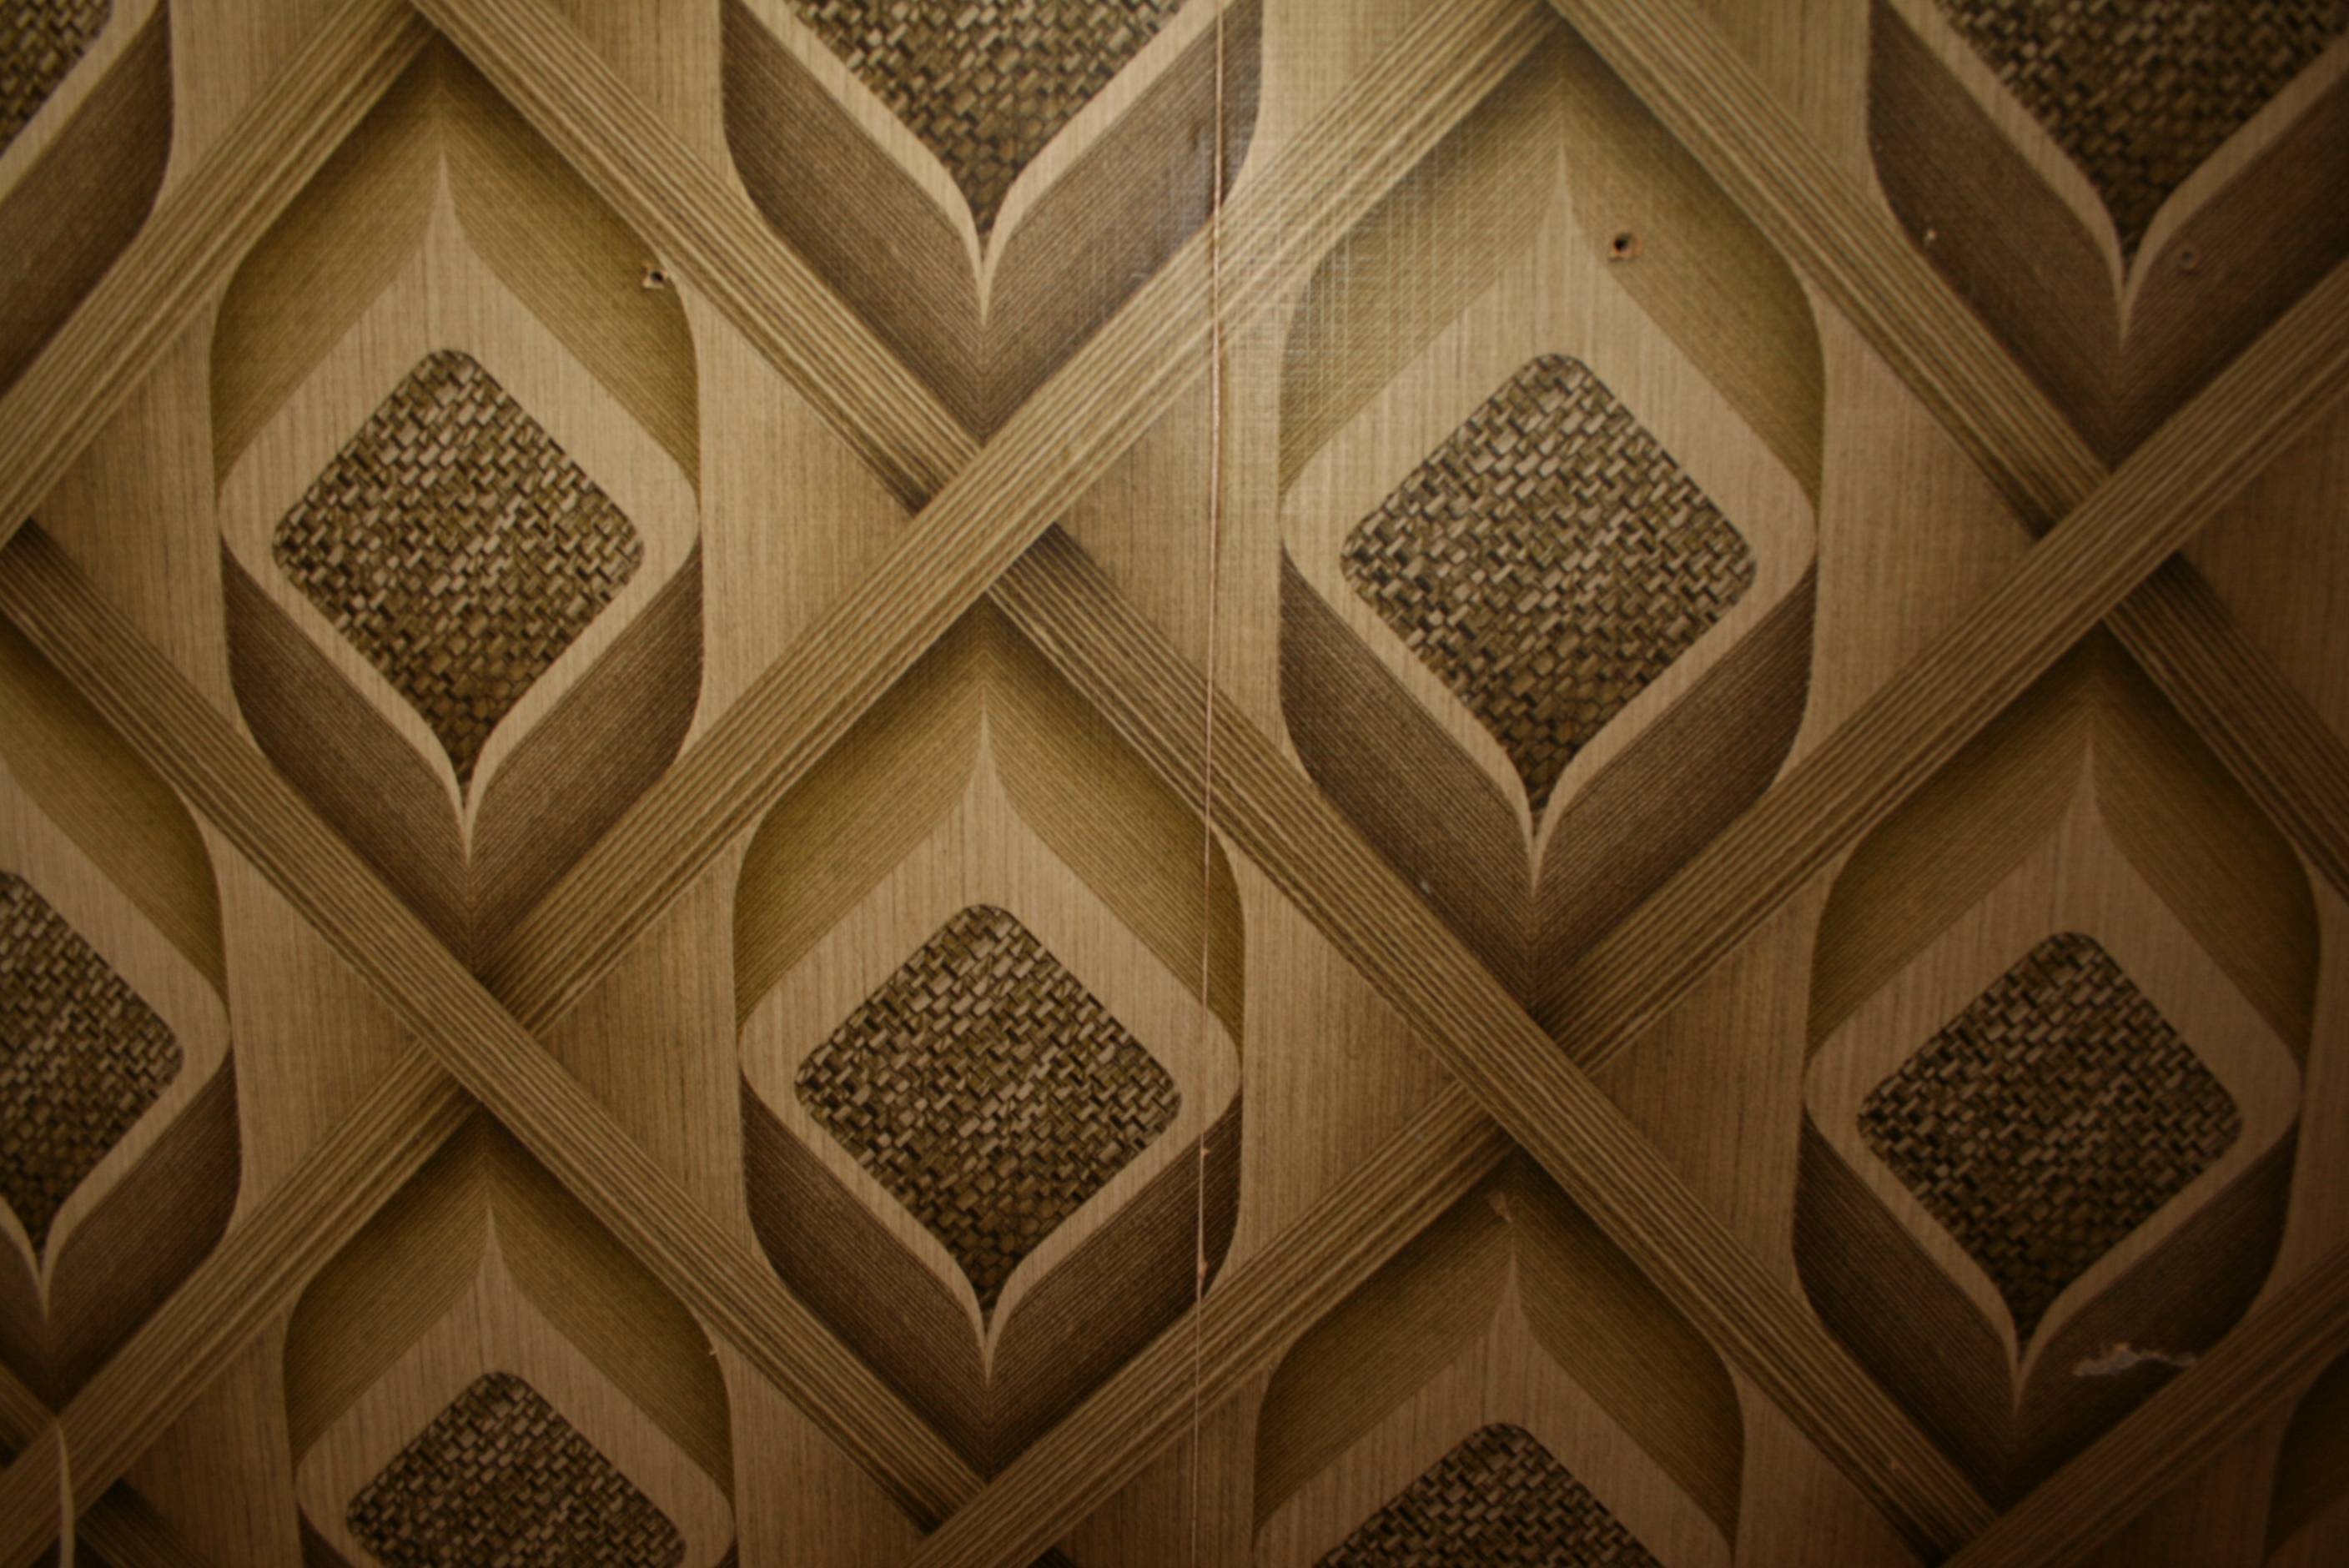 texture interior textures textured 3d designs modern walls imvu wallpapers background wood bedroom different bathroom seamless brown all3dfree living pattern